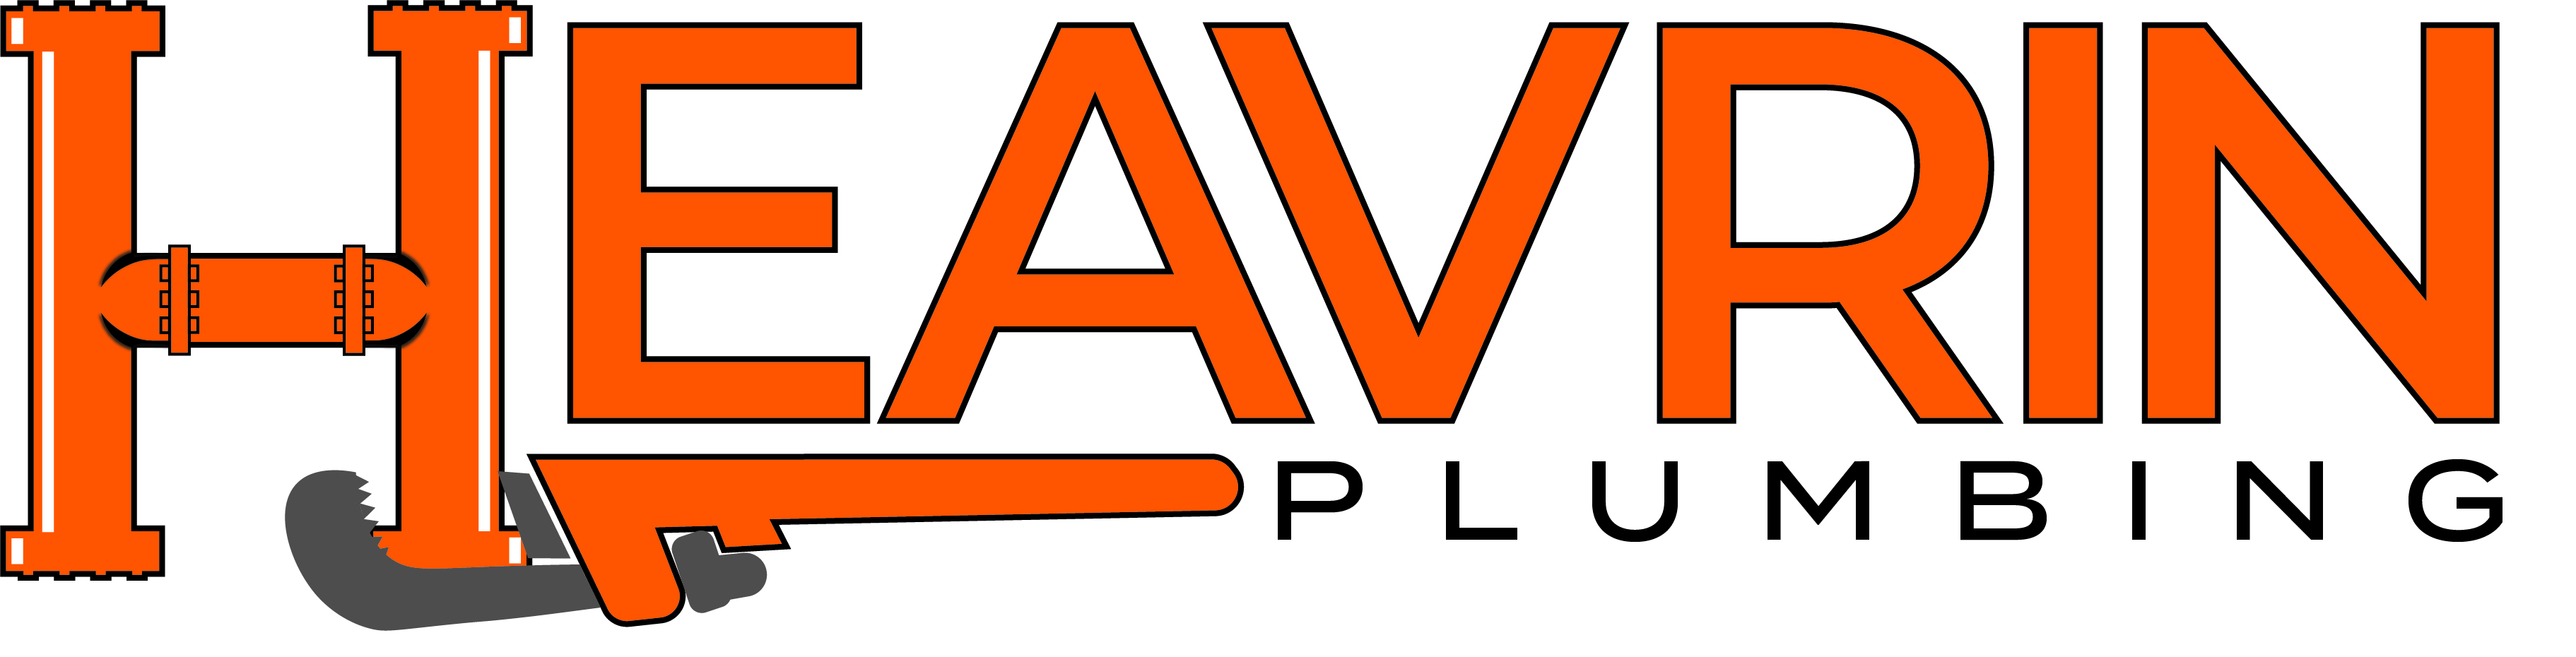 Heavrin Plumbing, LLC Logo